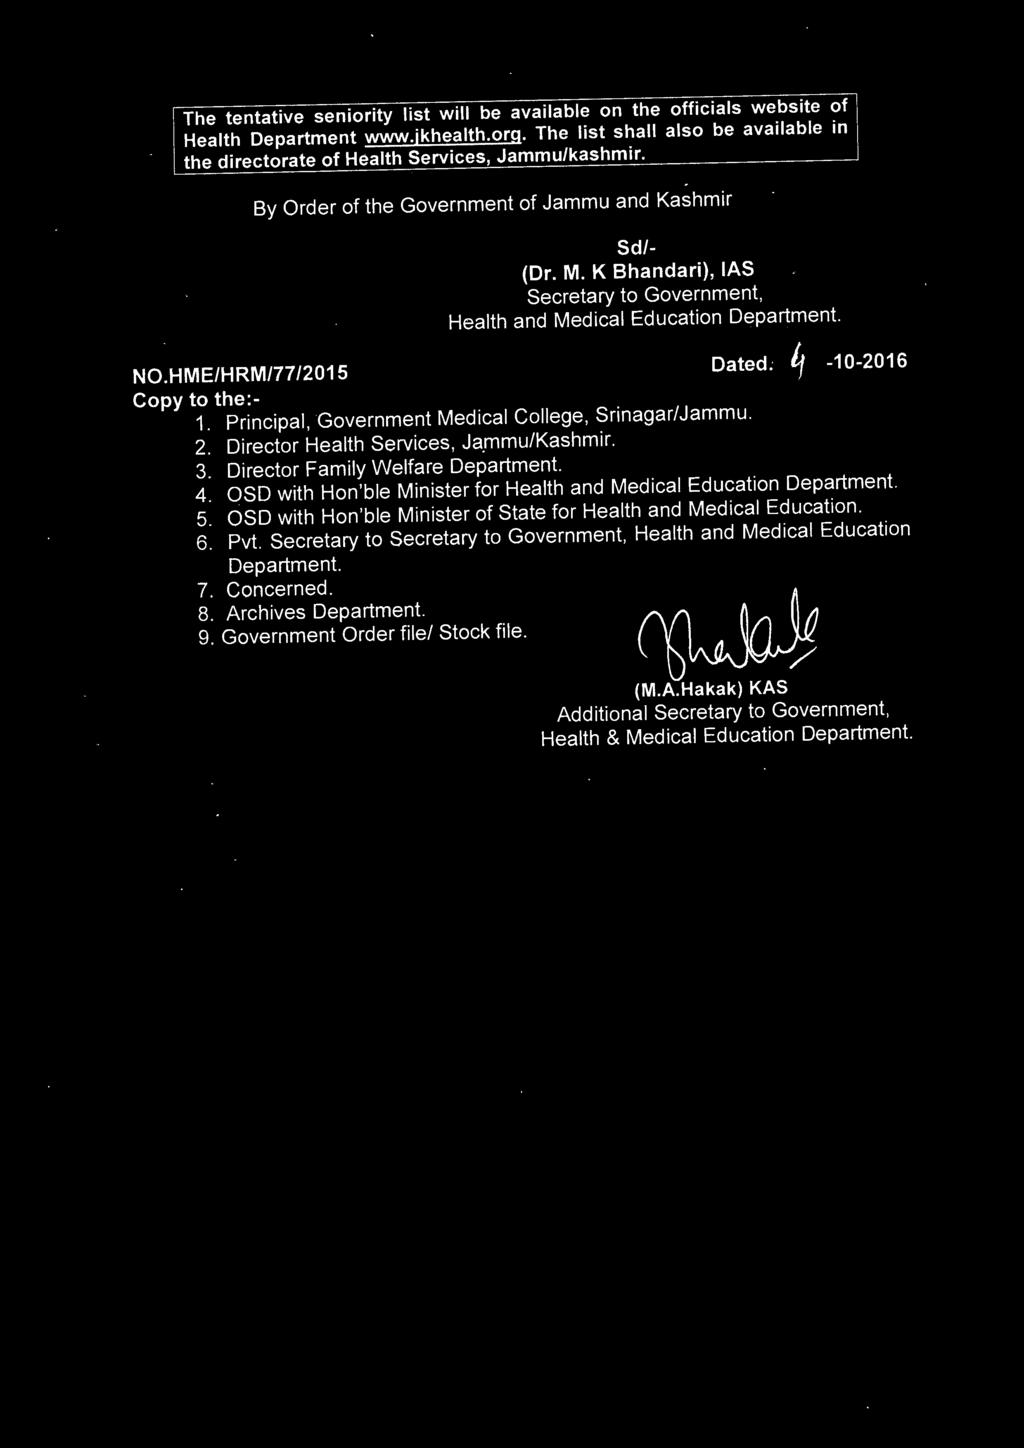 Principa, Government Medical Co ege, Srinagar/Jammu, 2. Director Health Seryices, Jammu/Kashmir' 3.